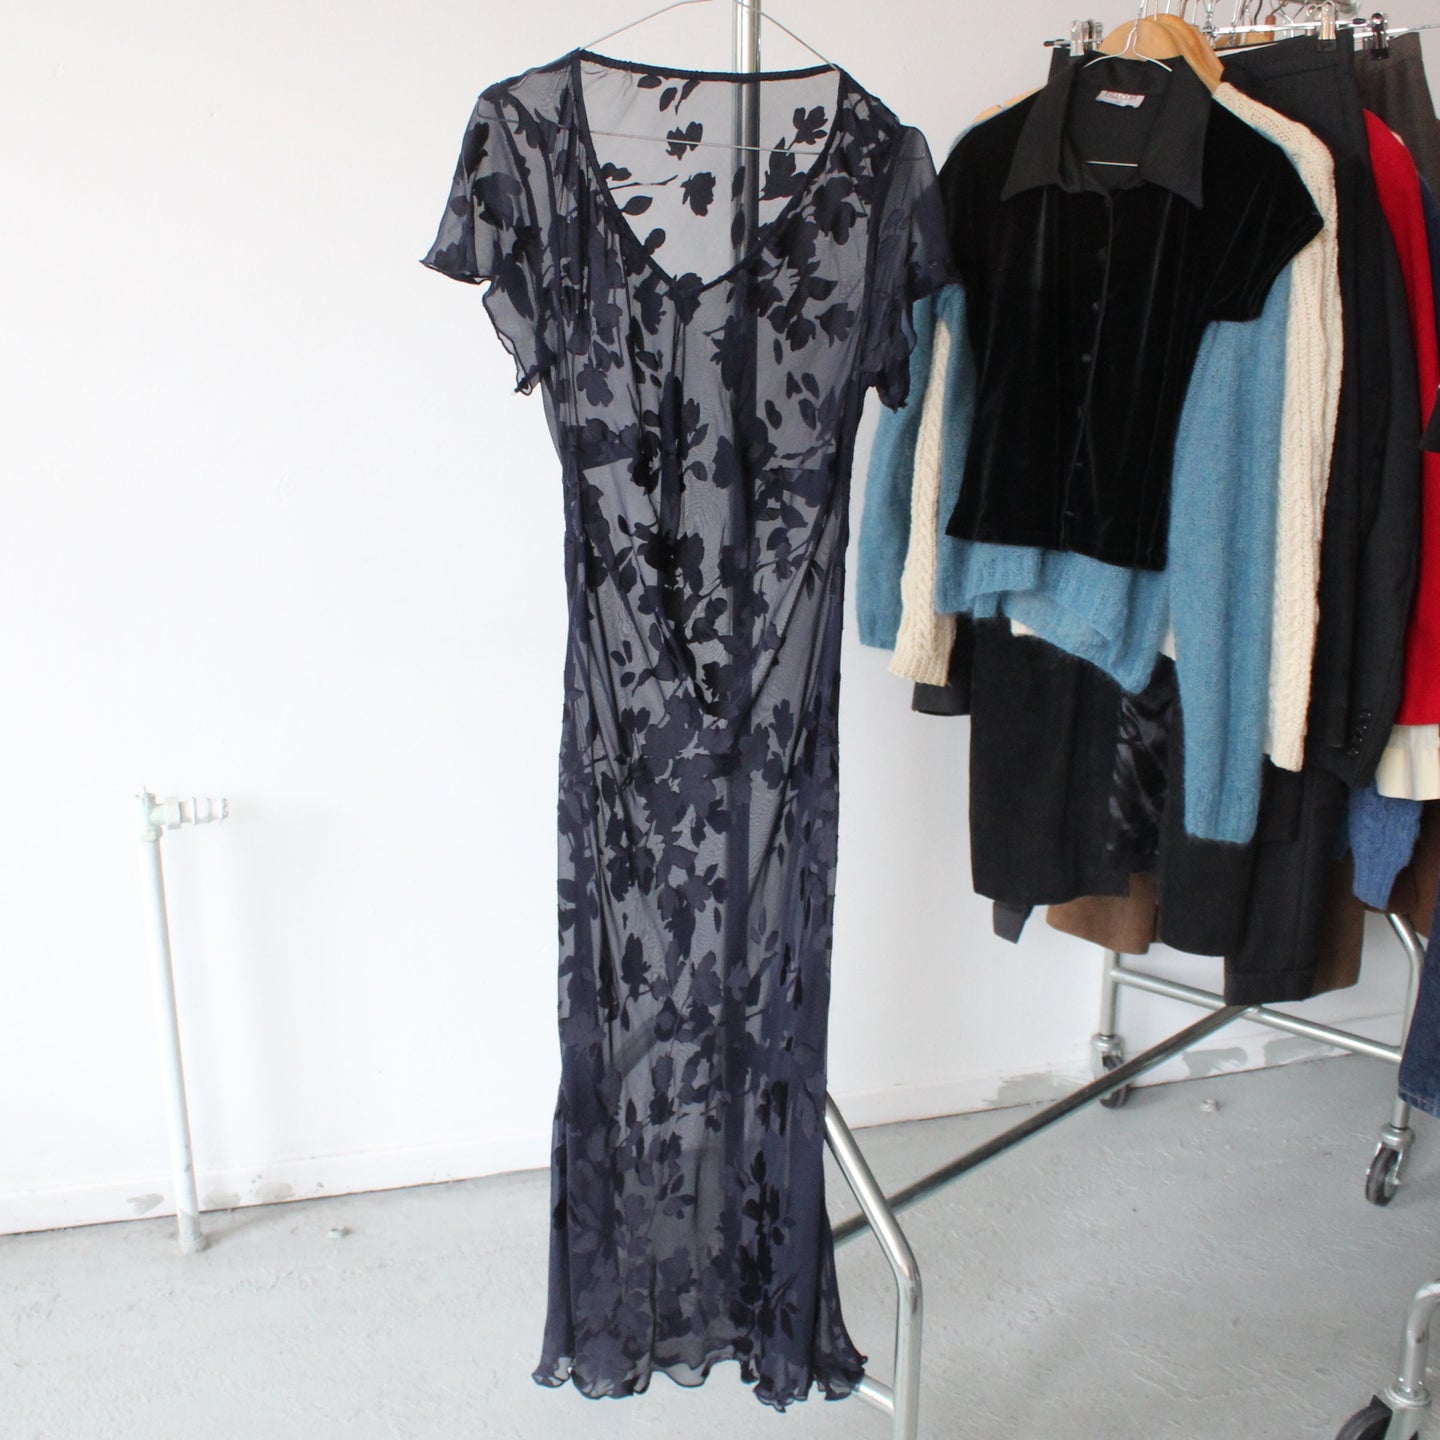 Vintage sheer mid length dress, size S-M